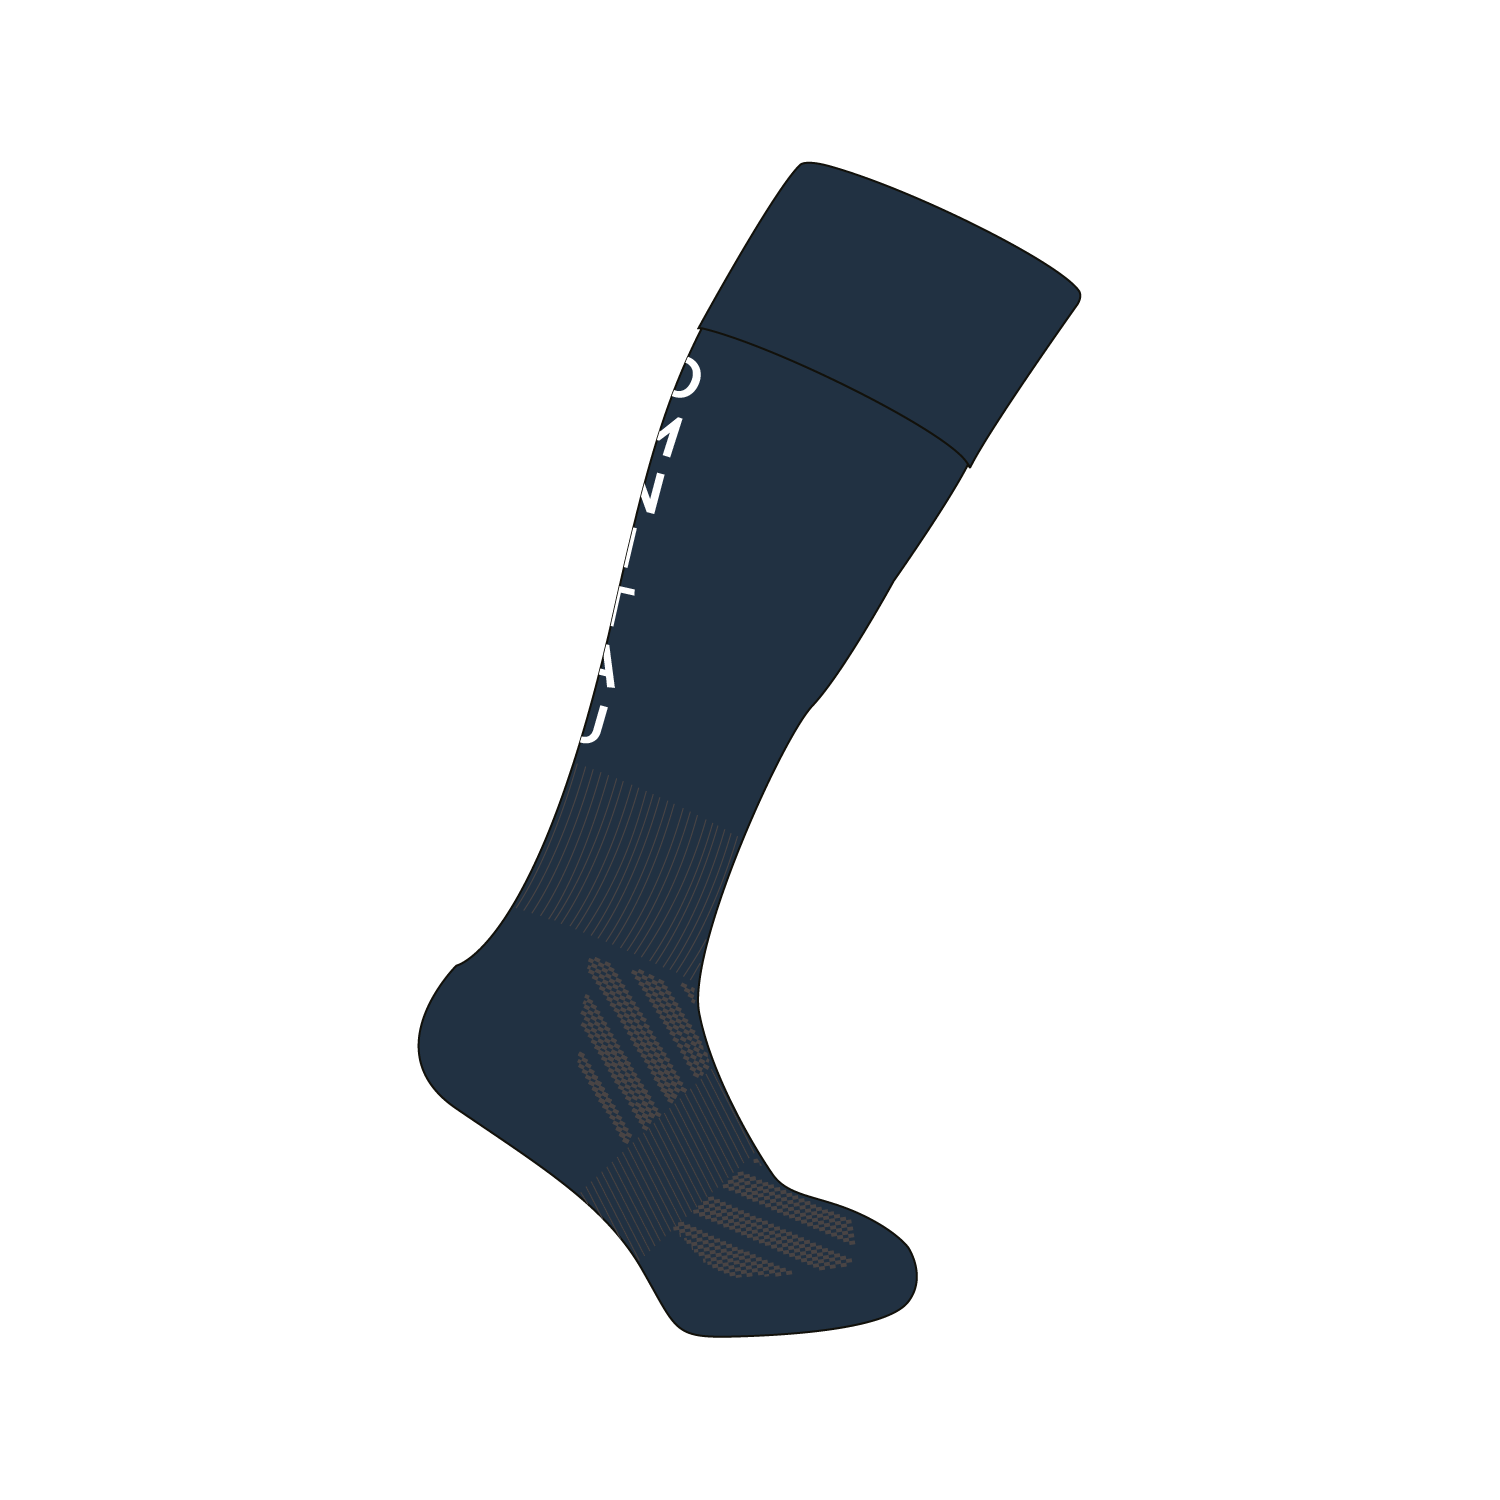 Omnitau Team Sports Classic Sports Socks - Navy with White Text